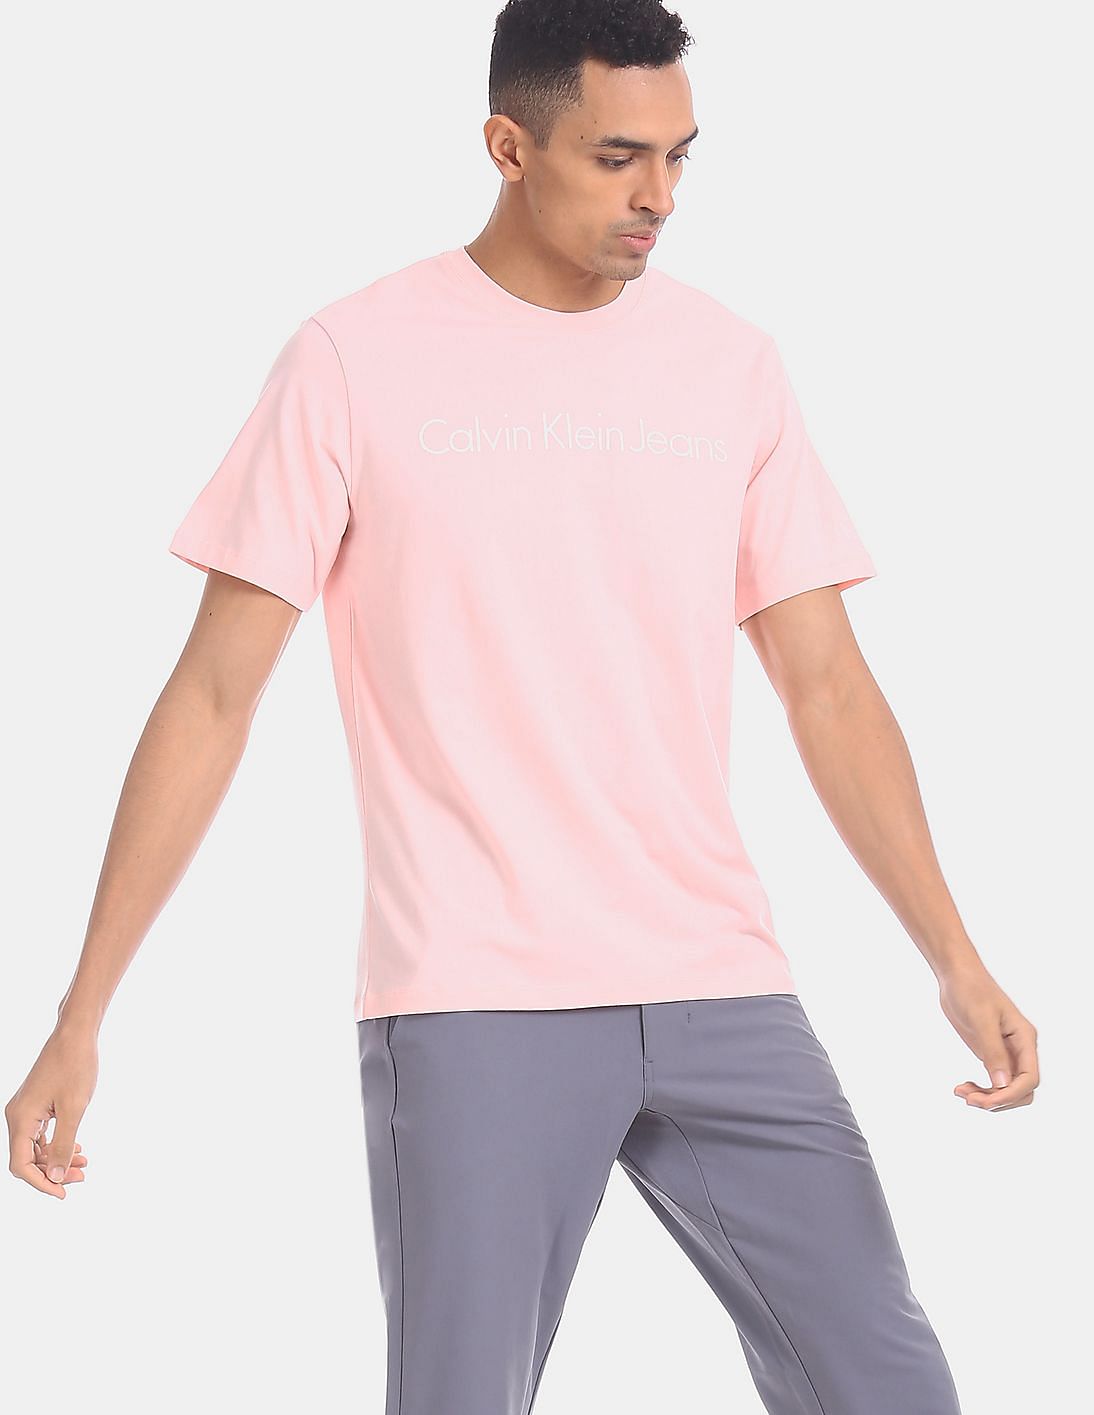 Buy Calvin Klein Men Pink Slim Fit Short Sleeve T-Shirt - NNNOW.com